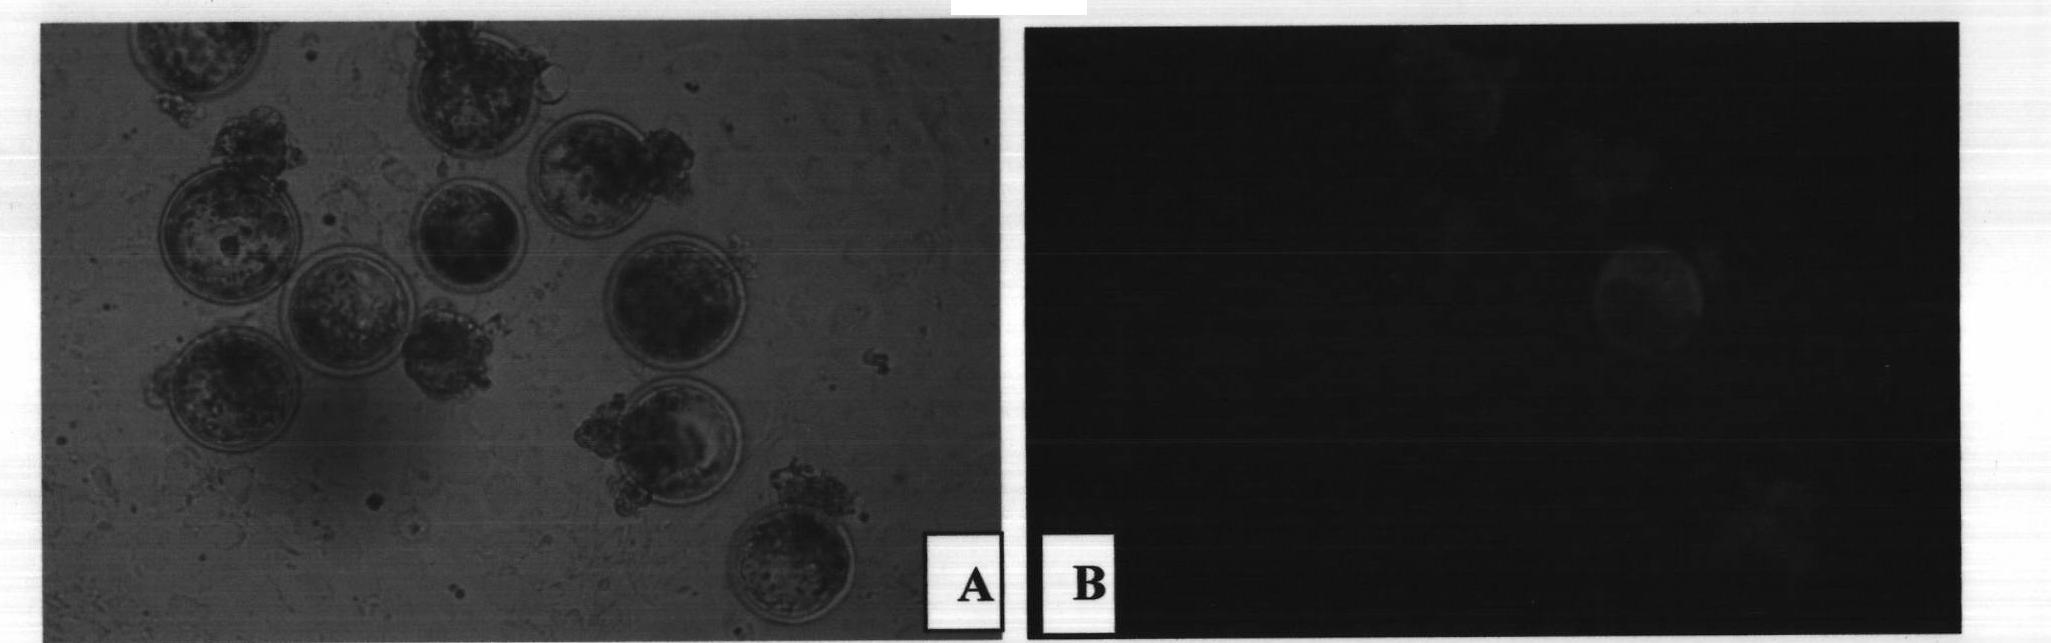 Method for breeding transgenic buffalos by using somatic cell nuclear transfer technology